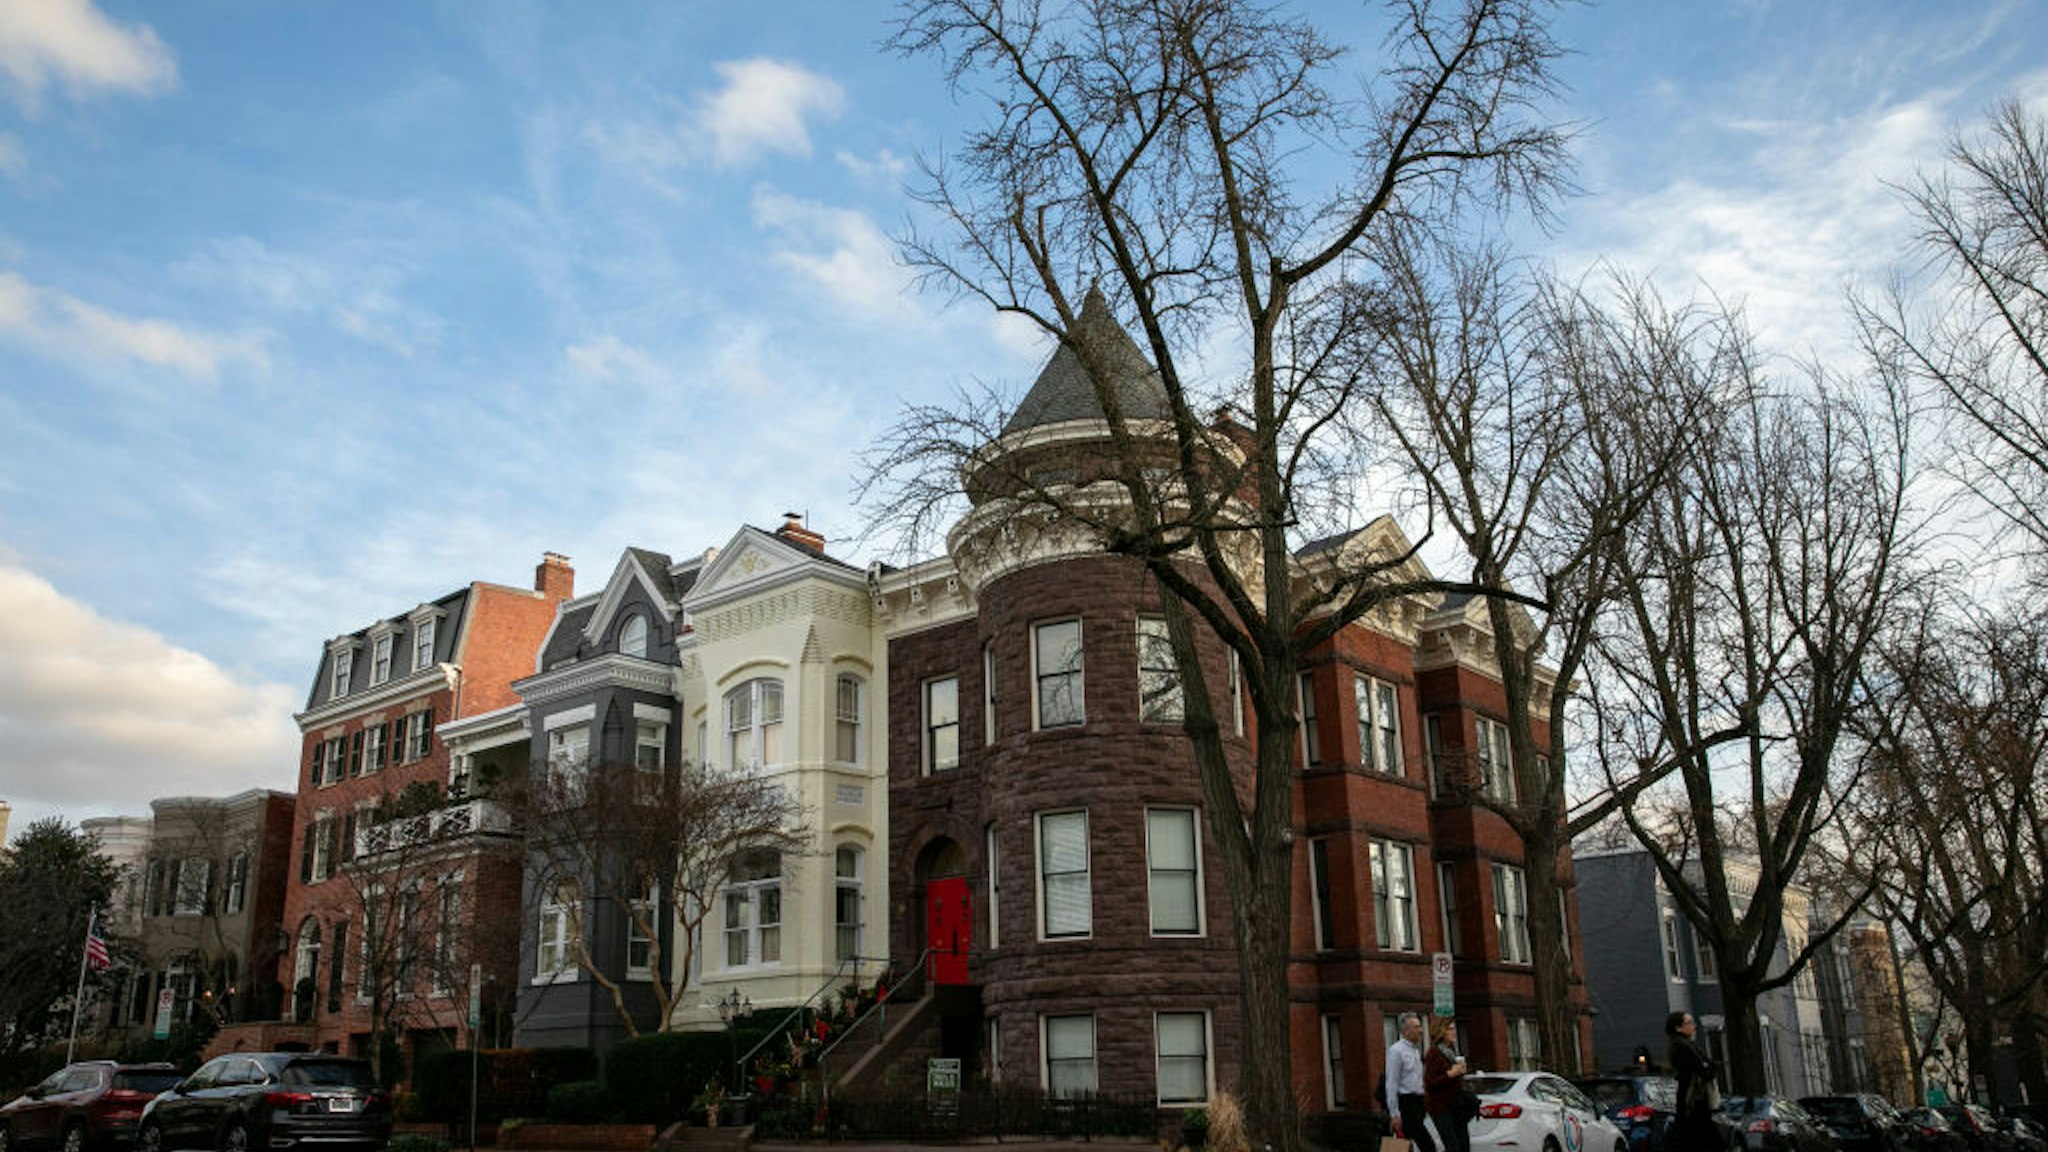 Homes in the Georgetown neighborhood of Washington, D.C. on January 11, 2020.